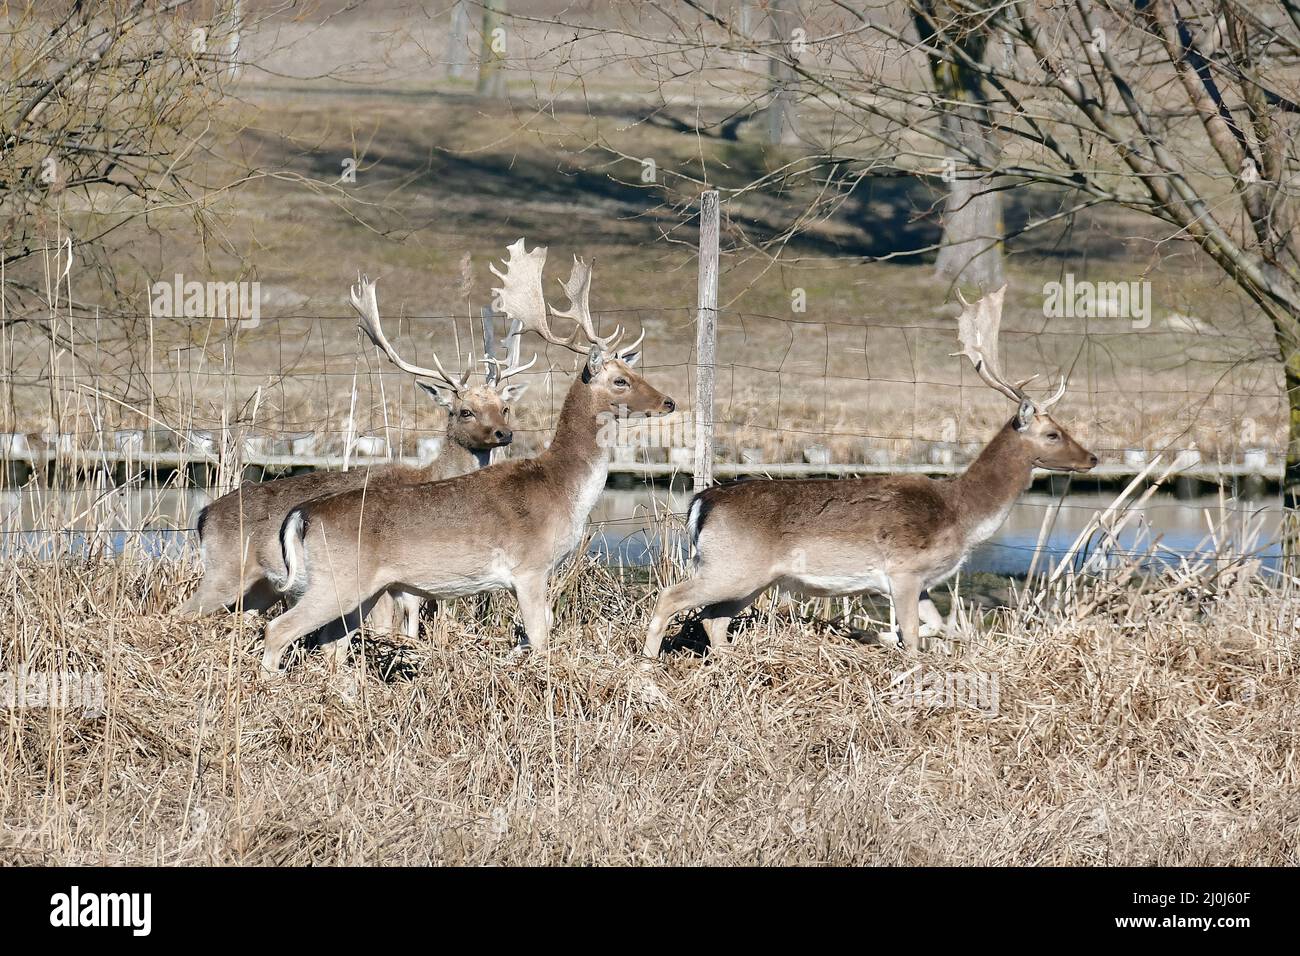 fallow deer, Dama dama, Damhirsch, Damwild, európai dámvad, dámszarvas, Bácsalmás, Bács-Kiskun County, Hungary, Magyarország, Europe Stock Photo